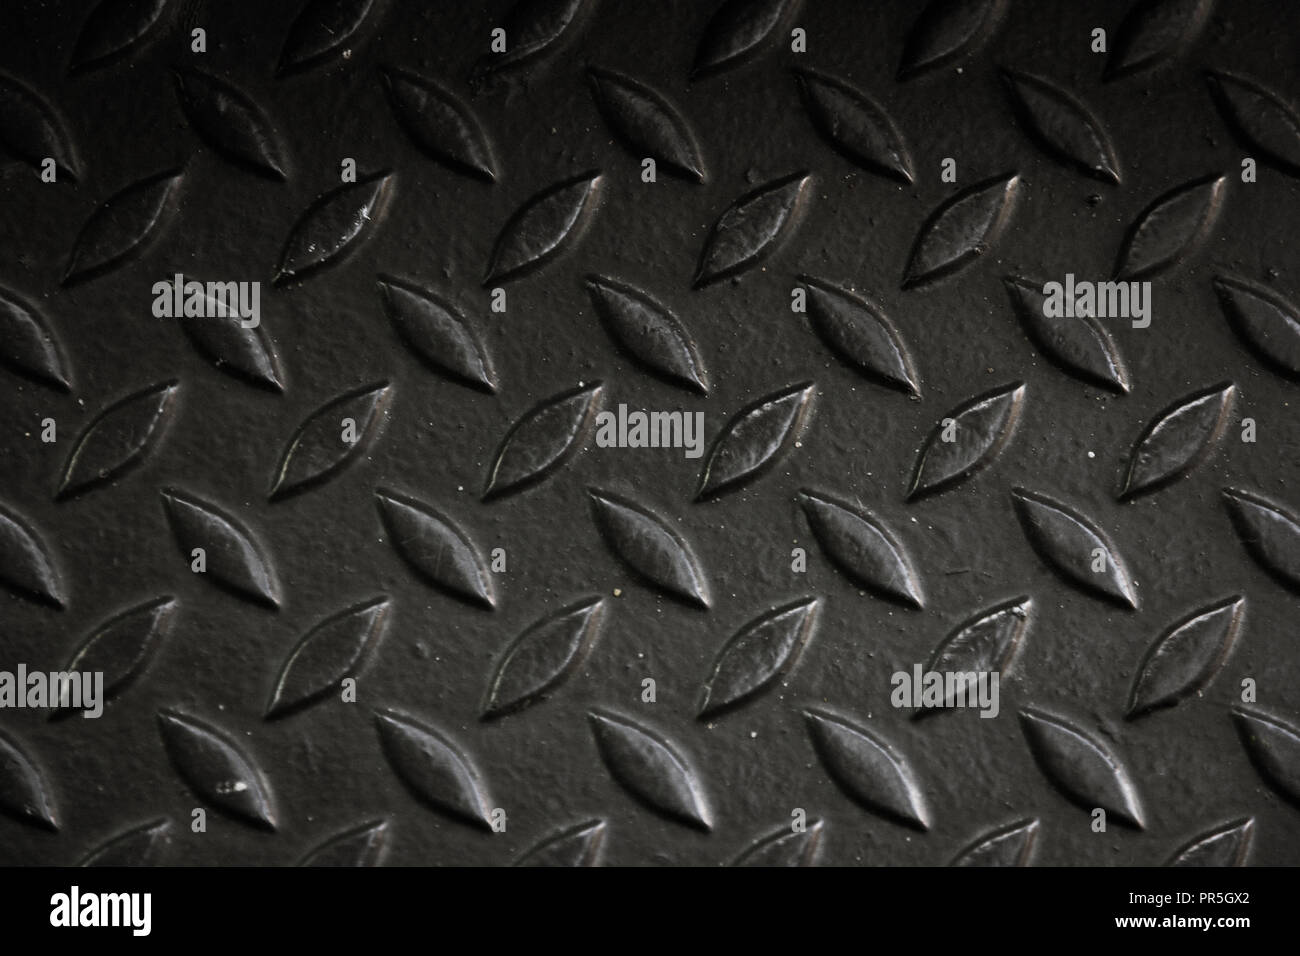 En aluminium noir avec la texture de fond de forme rhombus Banque D'Images